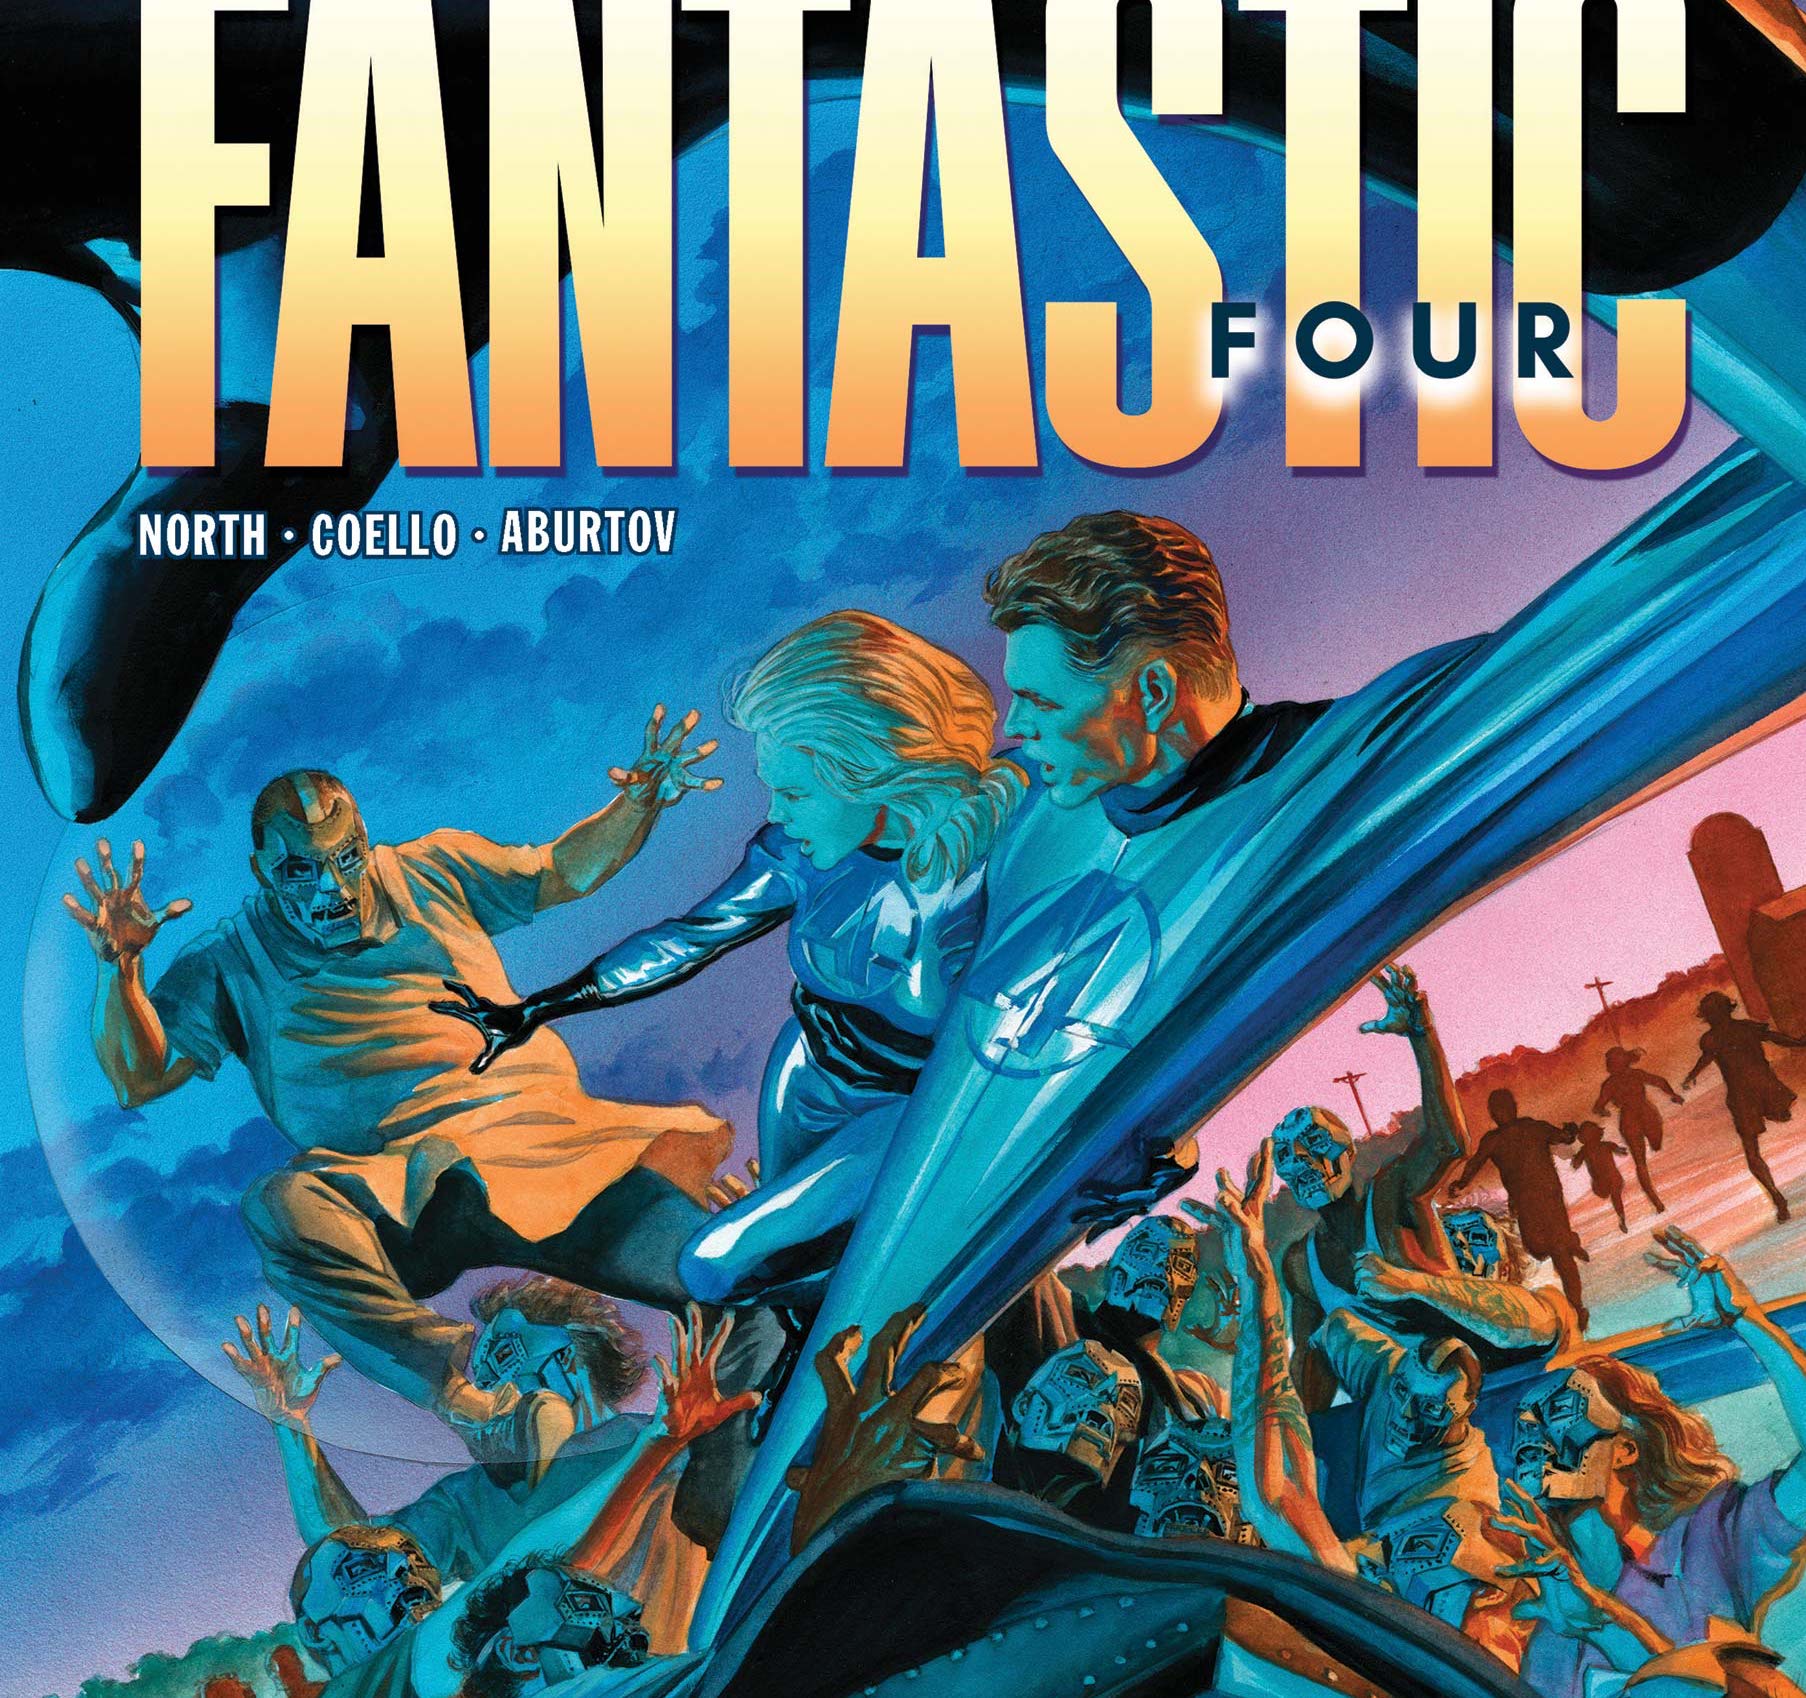 'Fantastic Four' #2 reveals a Dr. Doom-sized problem